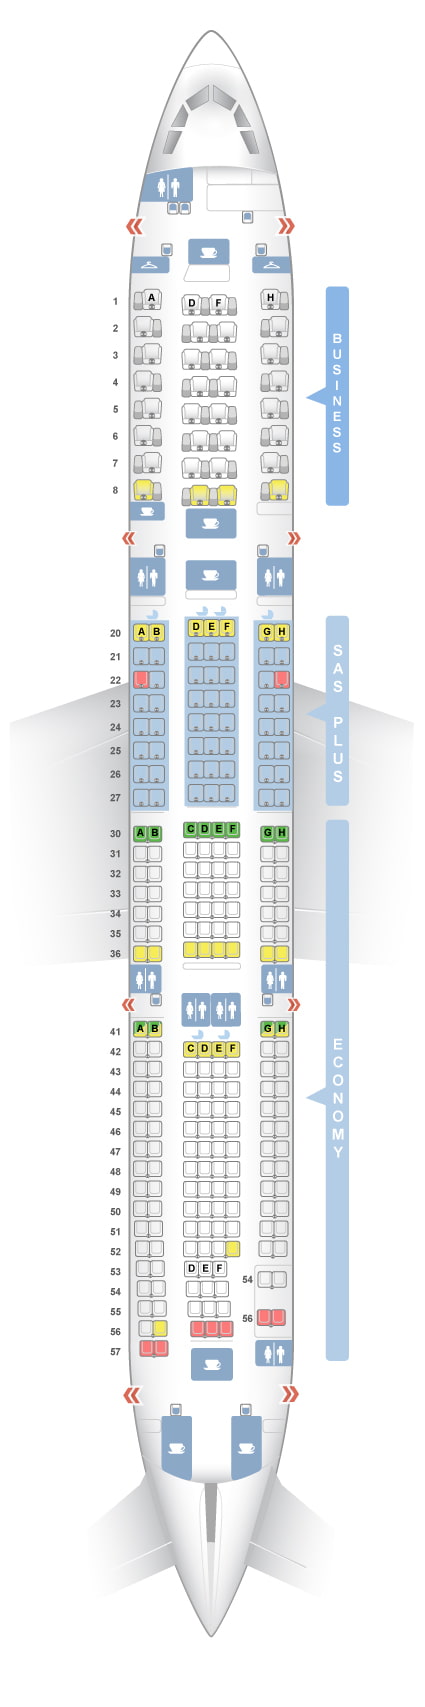 Airbus A330-300 SAS Seating Chart